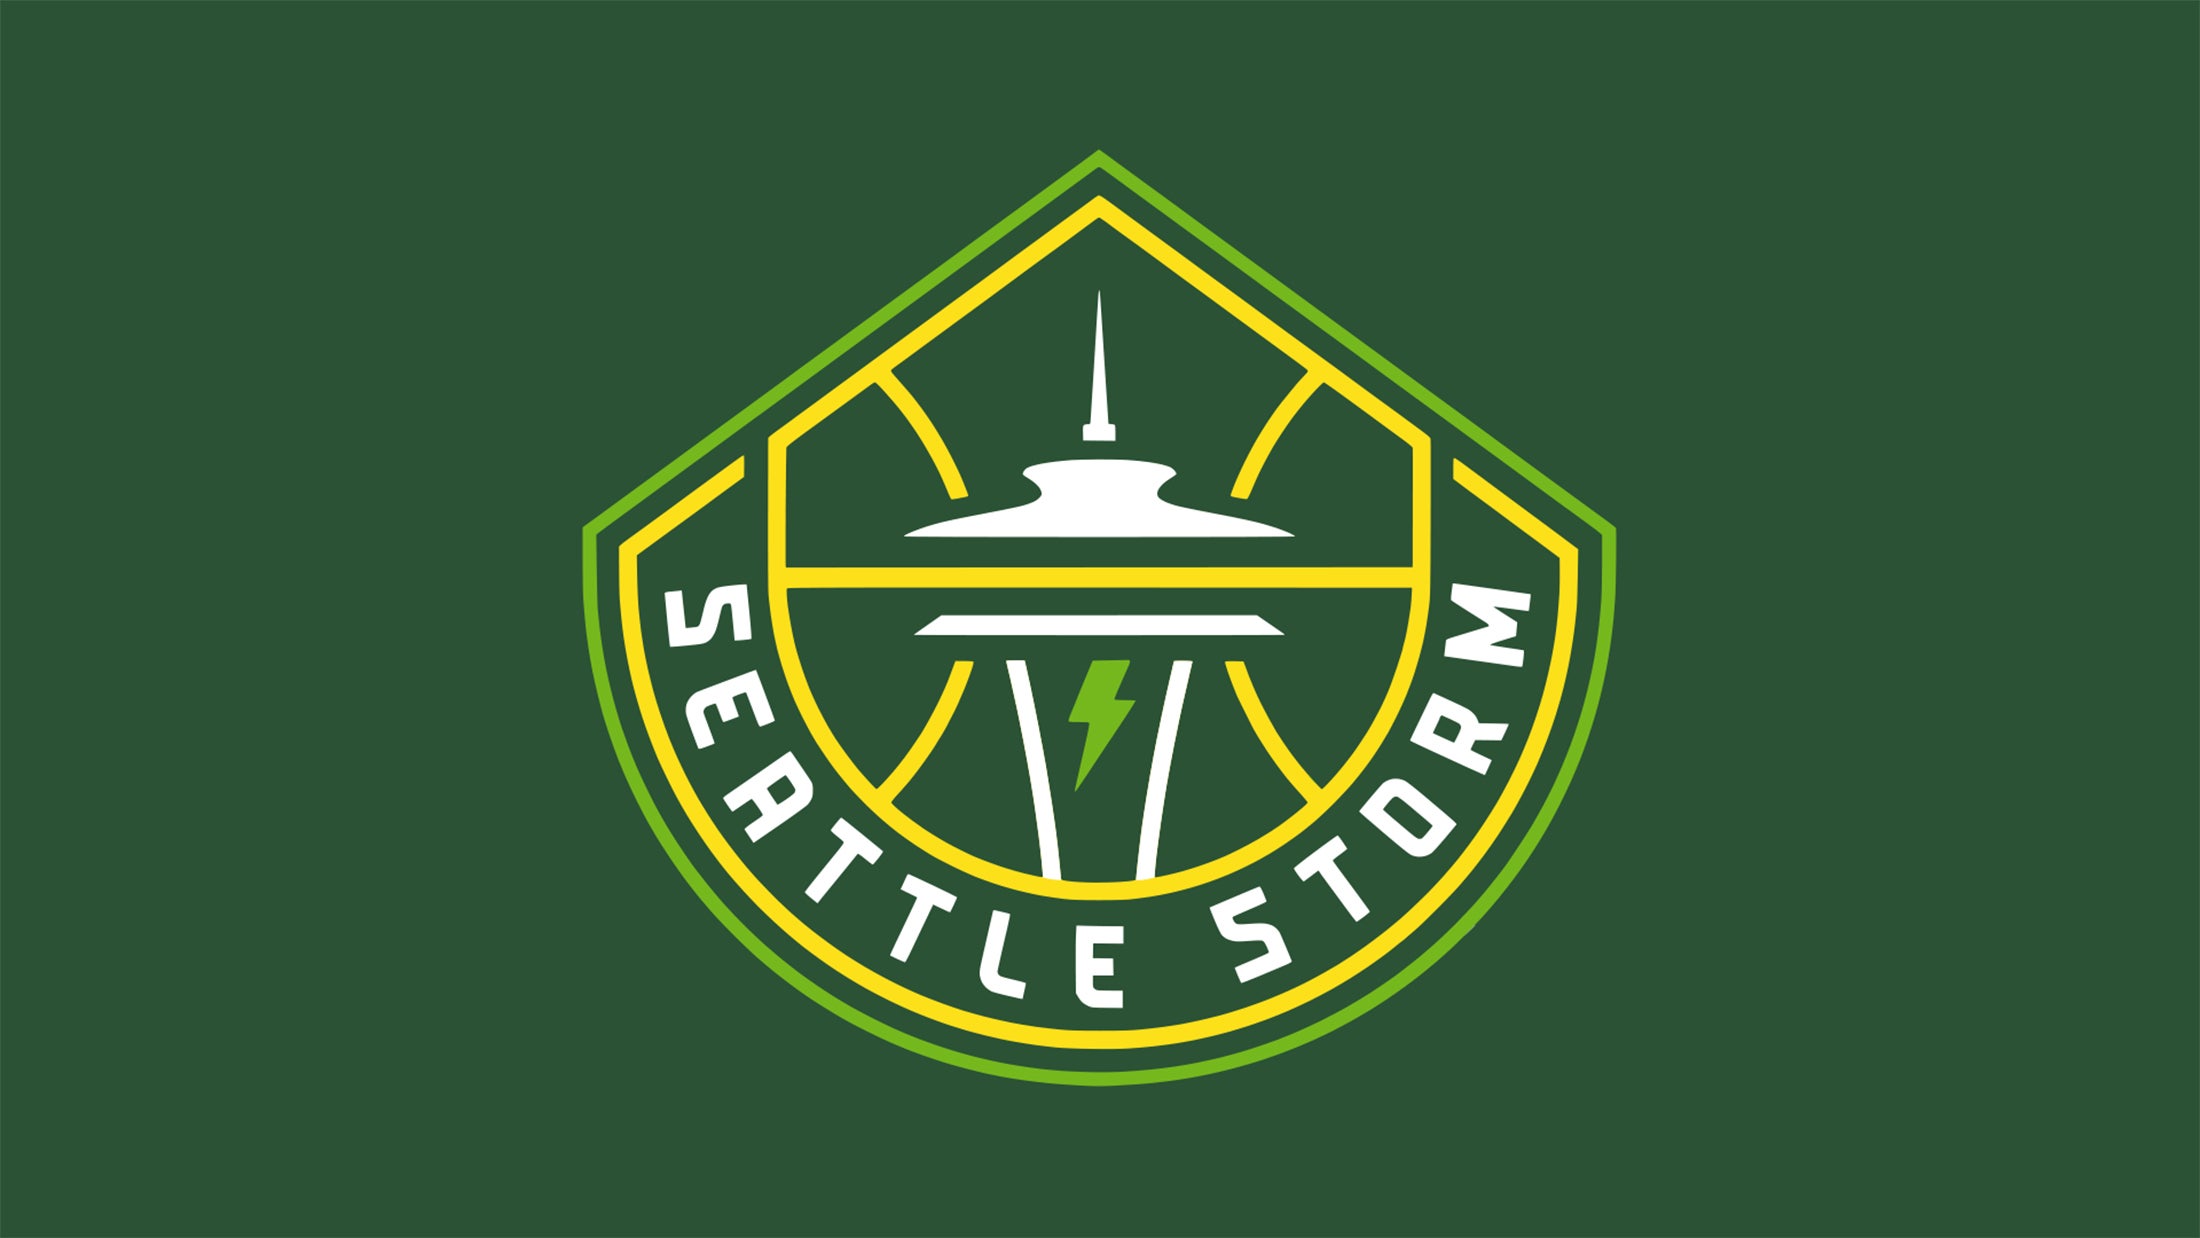 Seattle Storm vs. Washington Mystics at Climate Pledge Arena